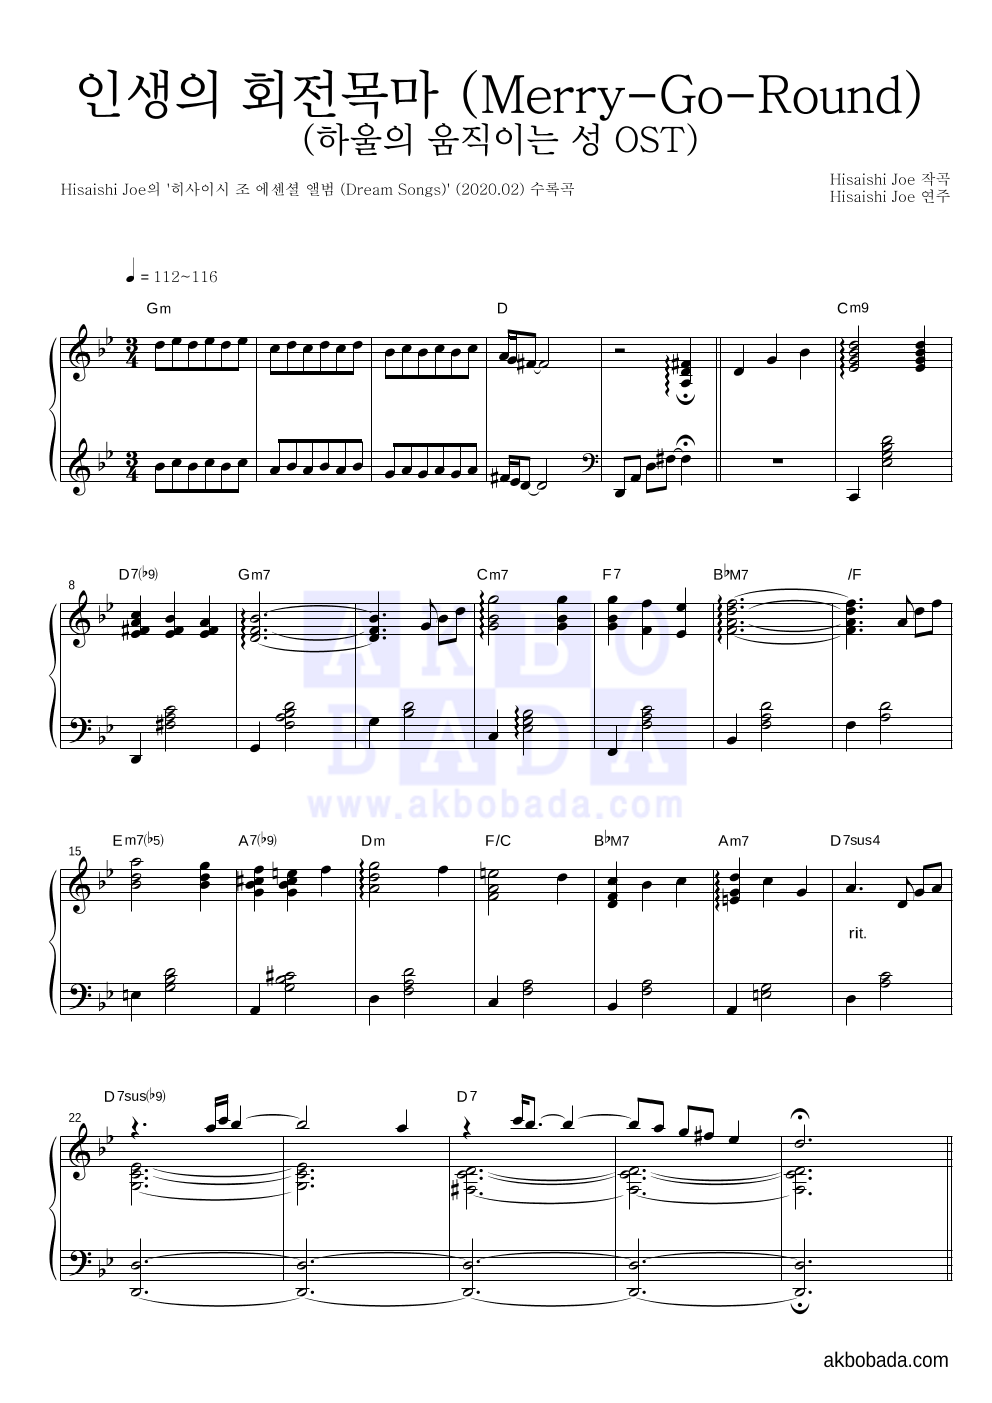 Hisaishi Joe - 인생의 회전목마 (Merry-Go-Round) (Essential Ver.) 피아노 2단 악보 